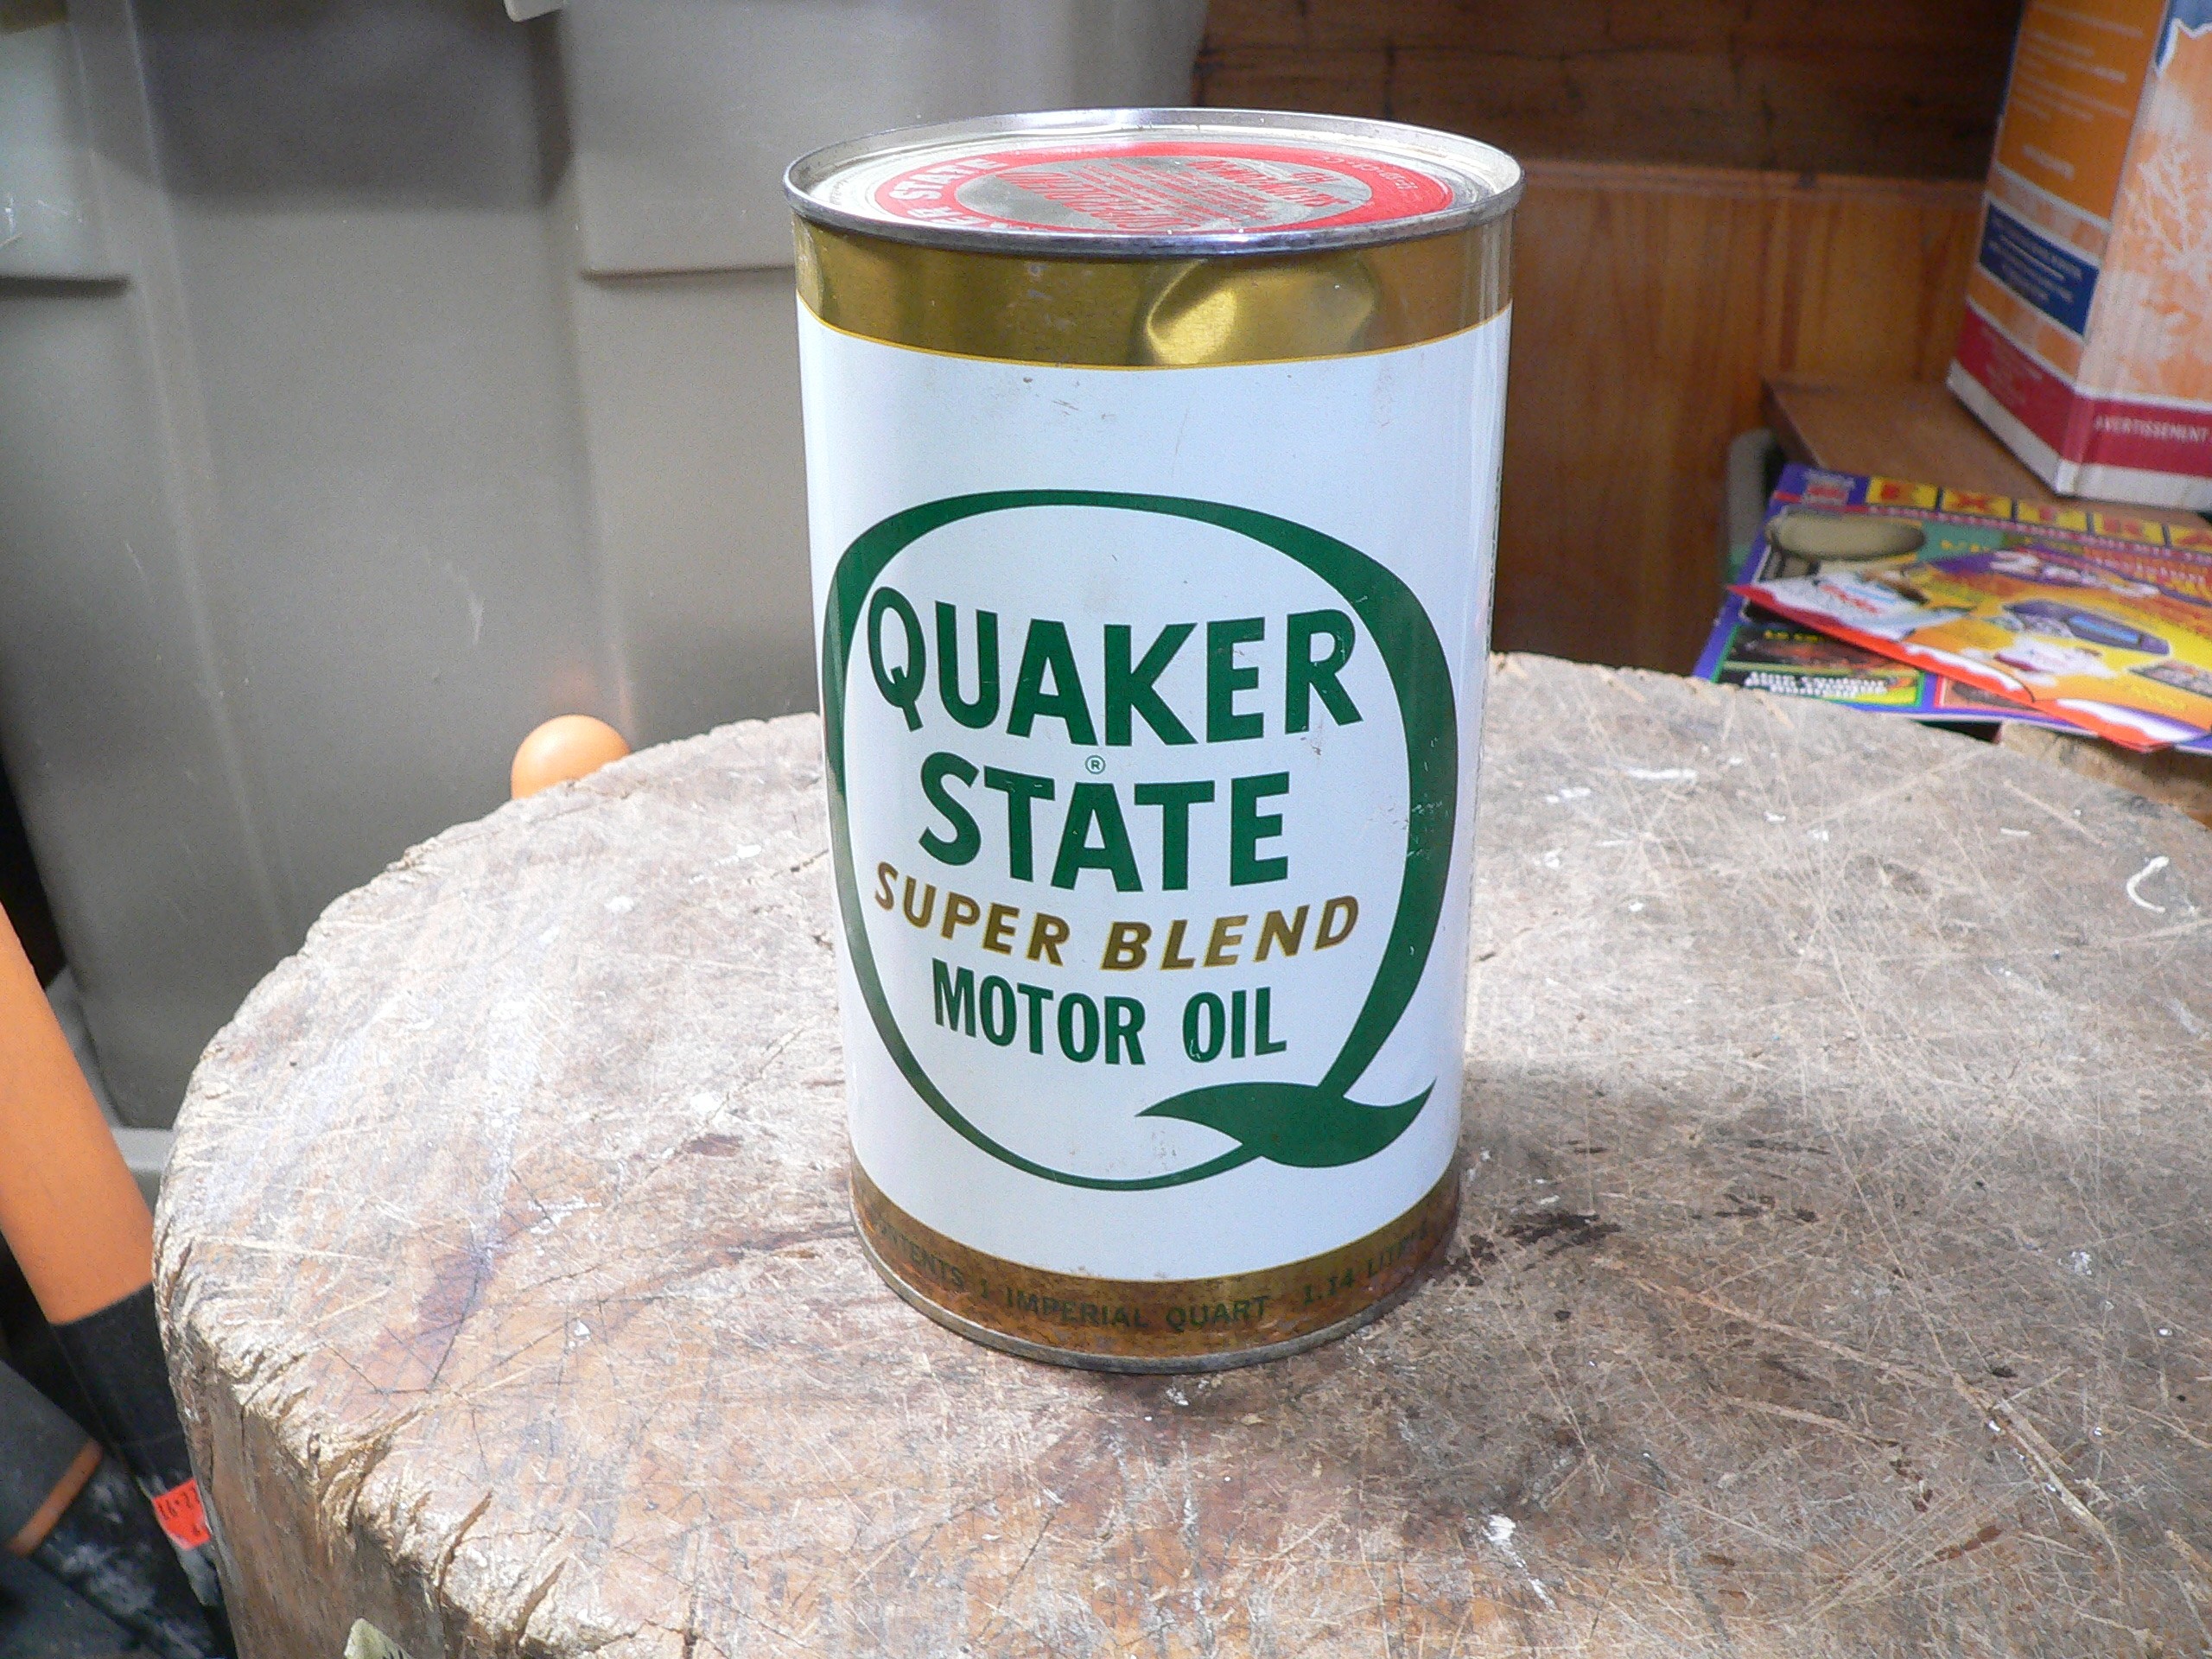 Canne huile quaker state # 10979.32 